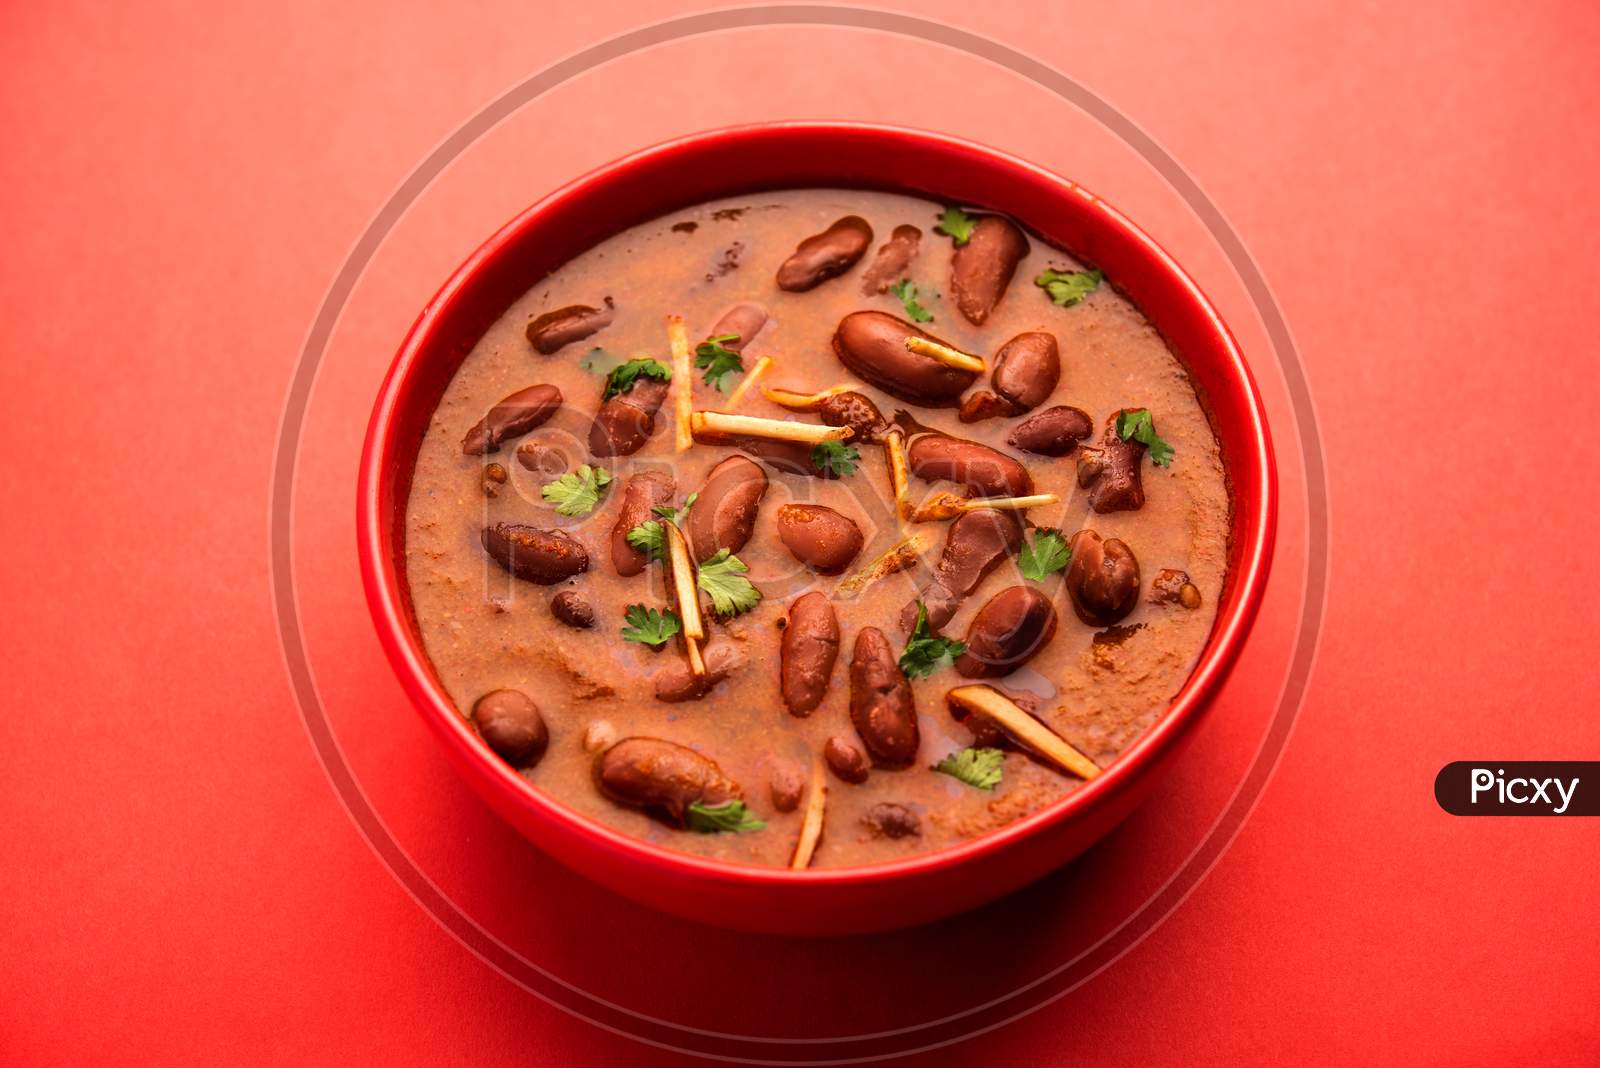 Rajma Curry Or Rajmah Masala Served With Rice And Laccha Paratha